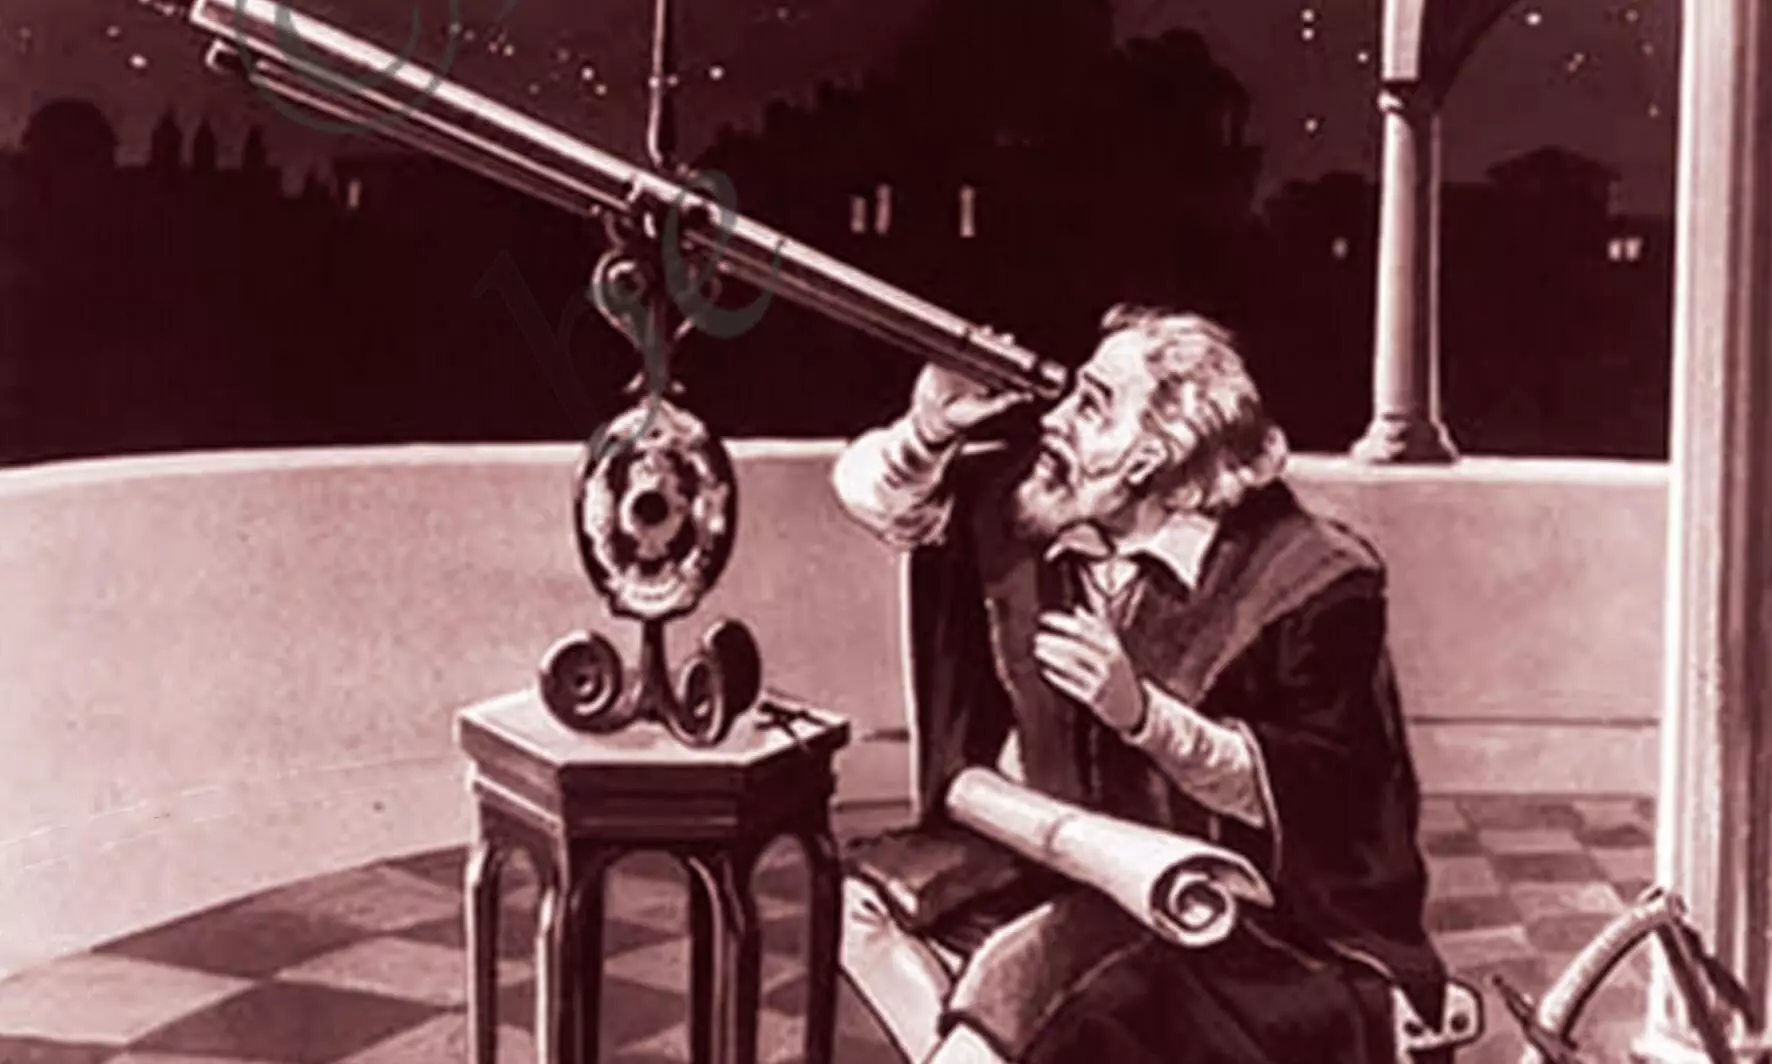 History of the telescope